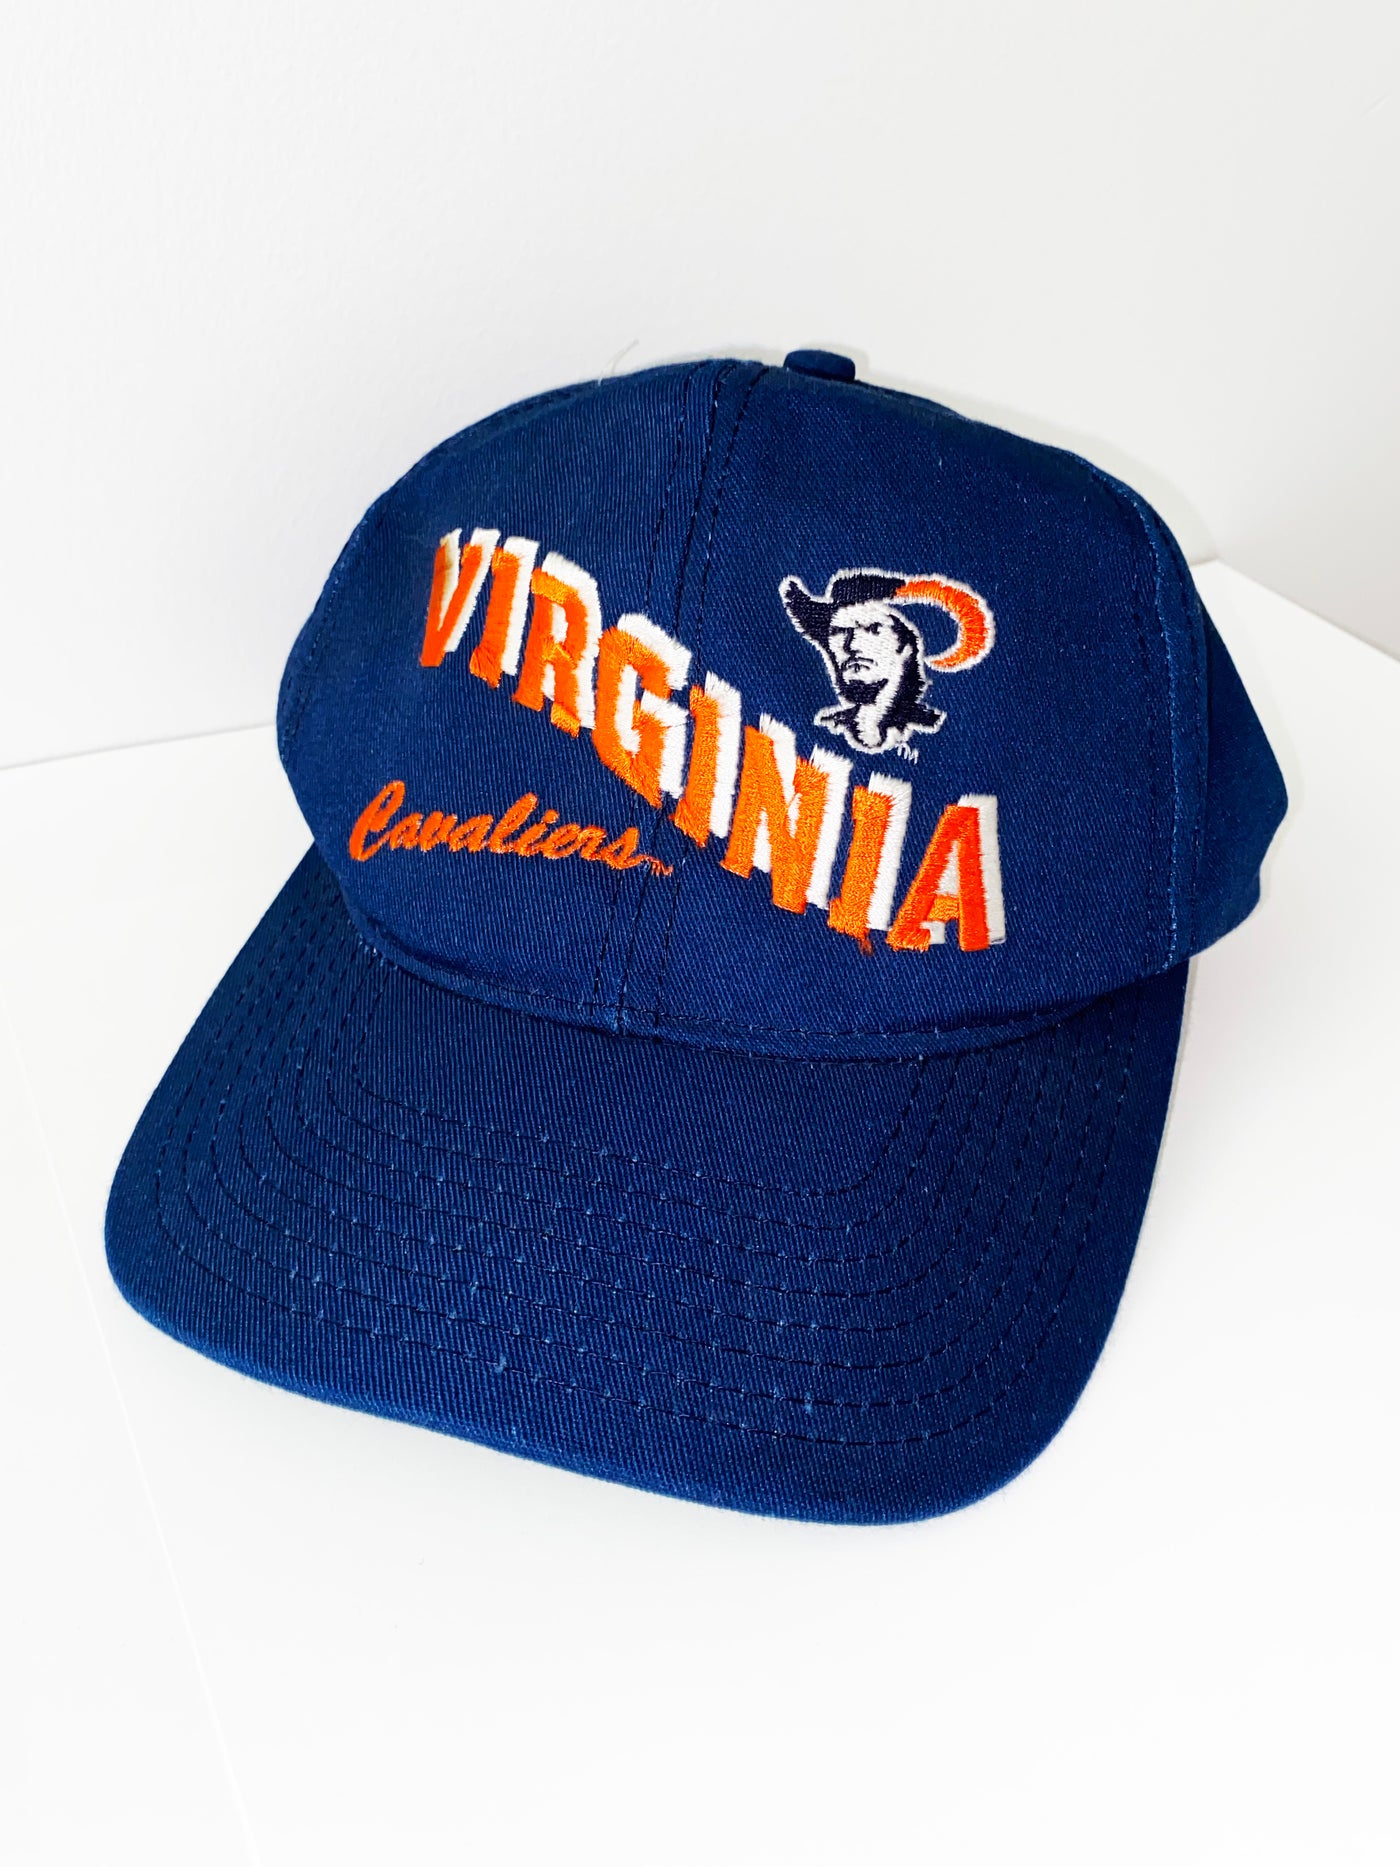 Vintage University of Virginia Cavaliers Snapback